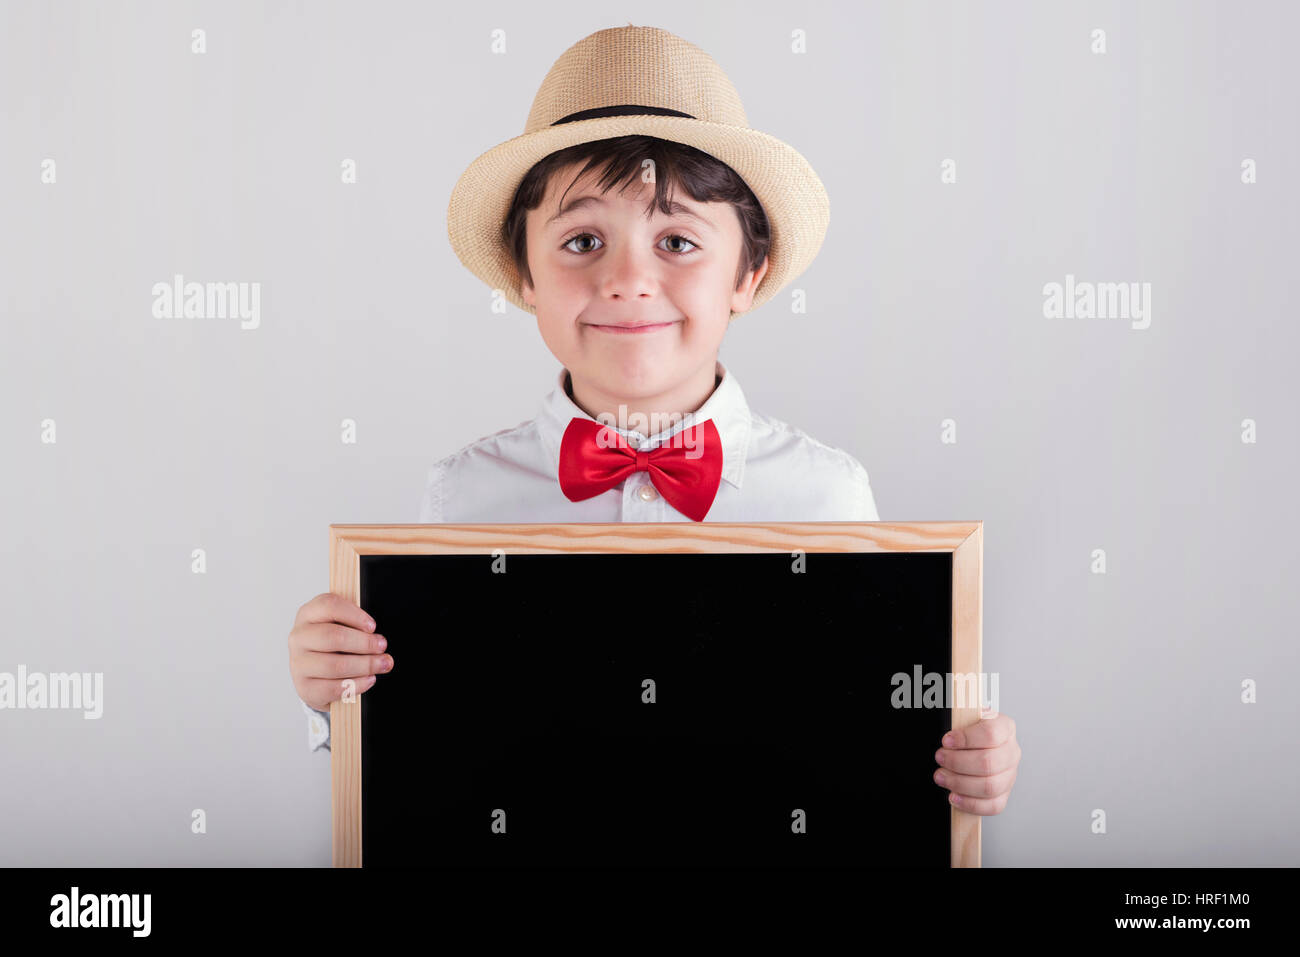 Happy child holding a blackboard Stock Photo